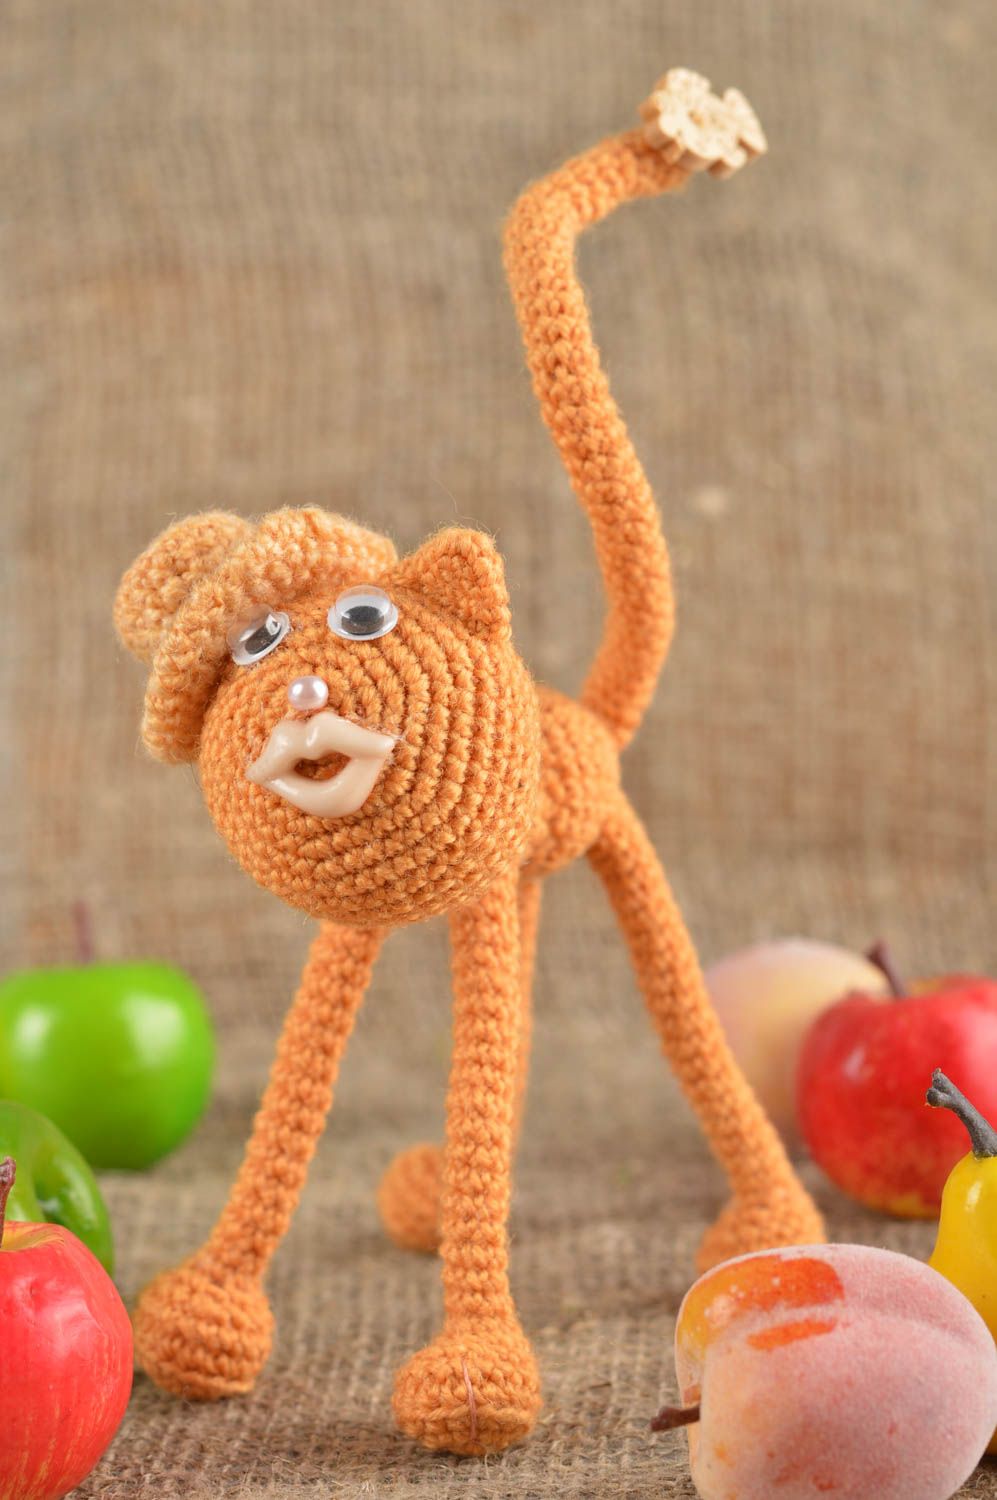 Hand-crocheted creative toy handmade crocheted toy for babies nursery decor photo 1